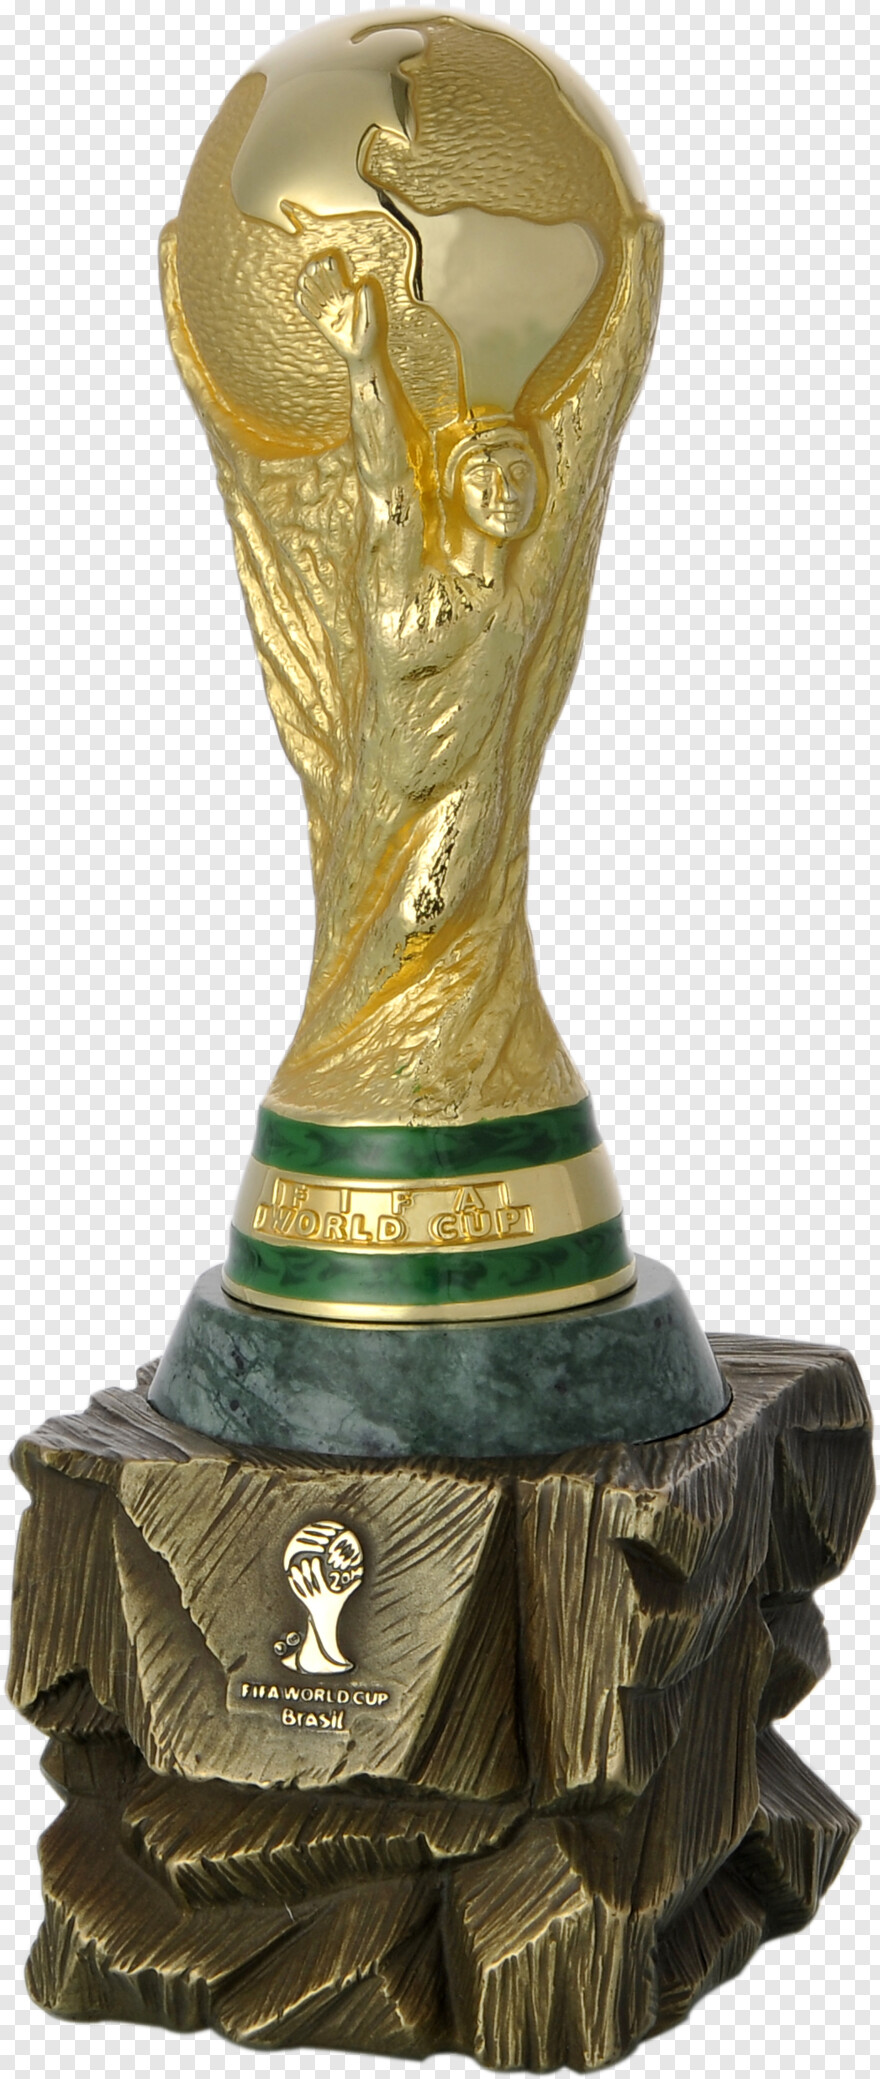 world-cup-2018-logo # 318671